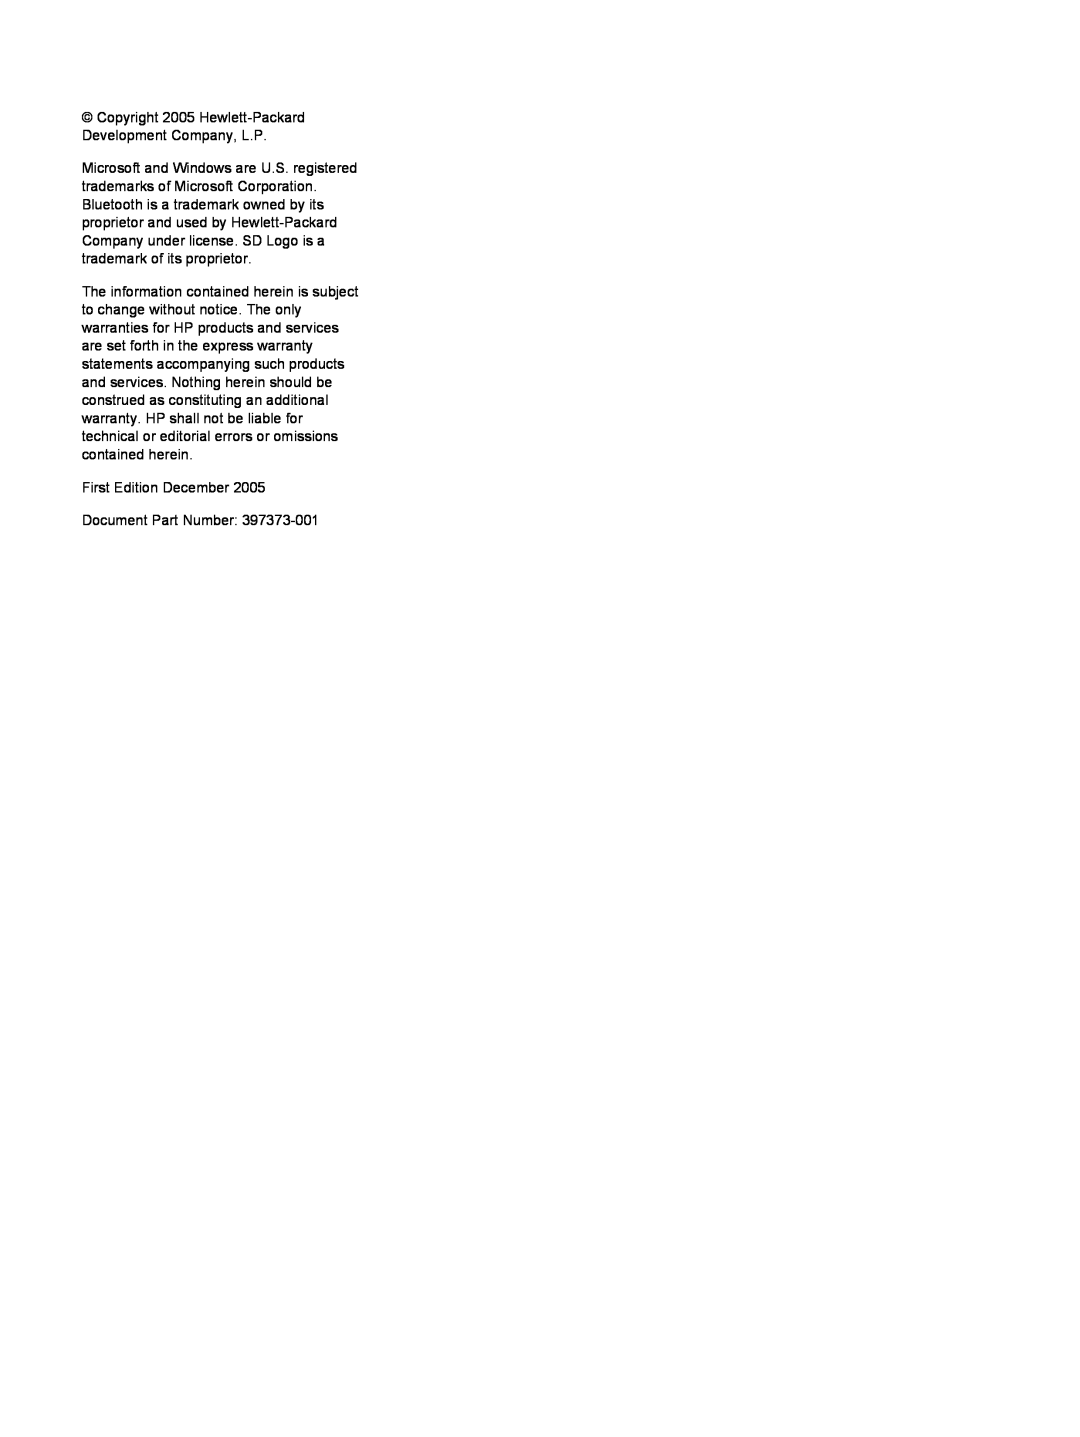 HP V5221EA, V5224TU Copyright 2005 Hewlett-Packard Development Company, L.P, First Edition December Document Part Number 